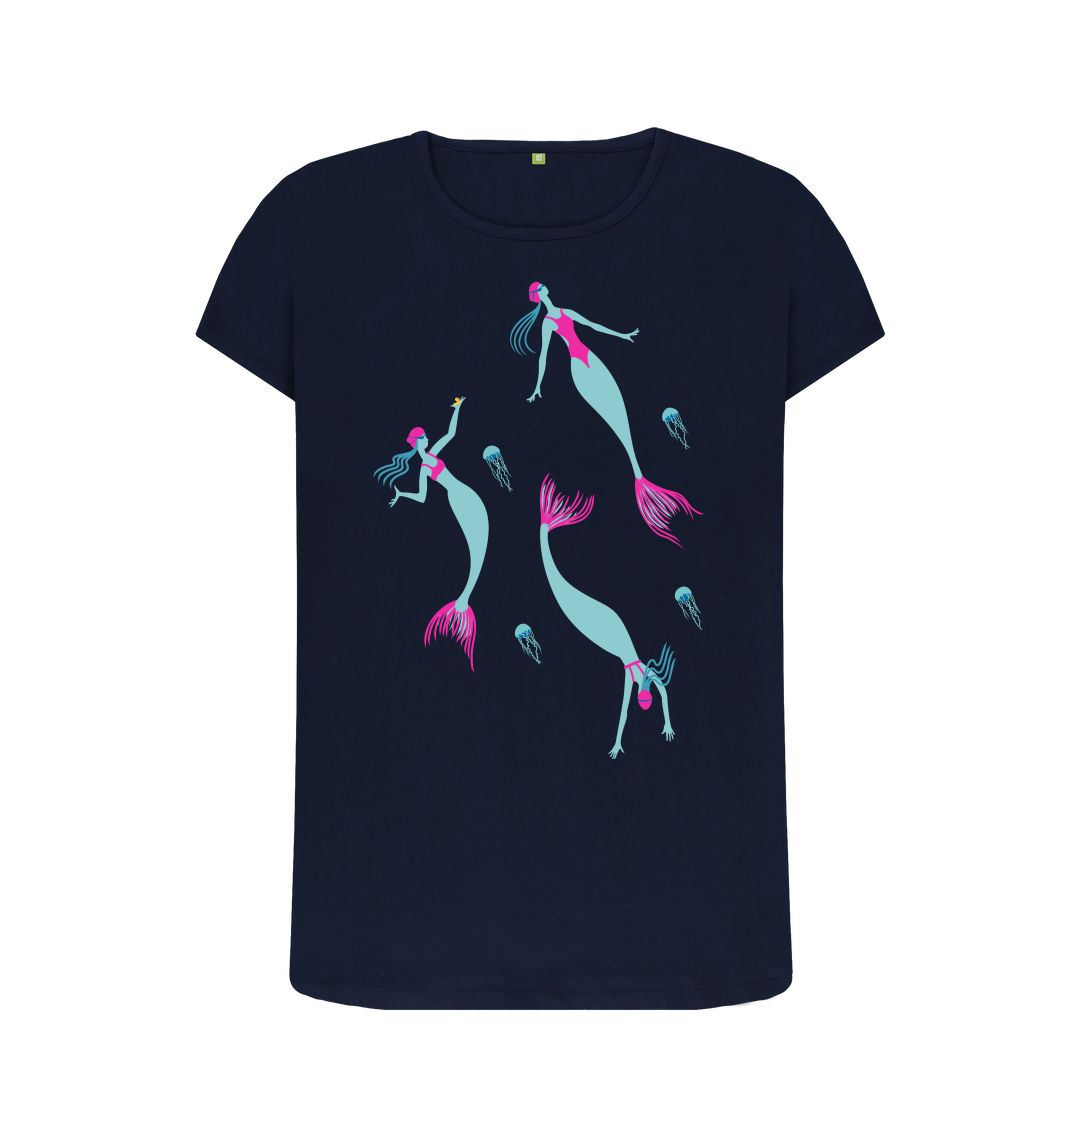 Navy Blue Mermaid T-shirt for wild swimmers \u2013 women's fit